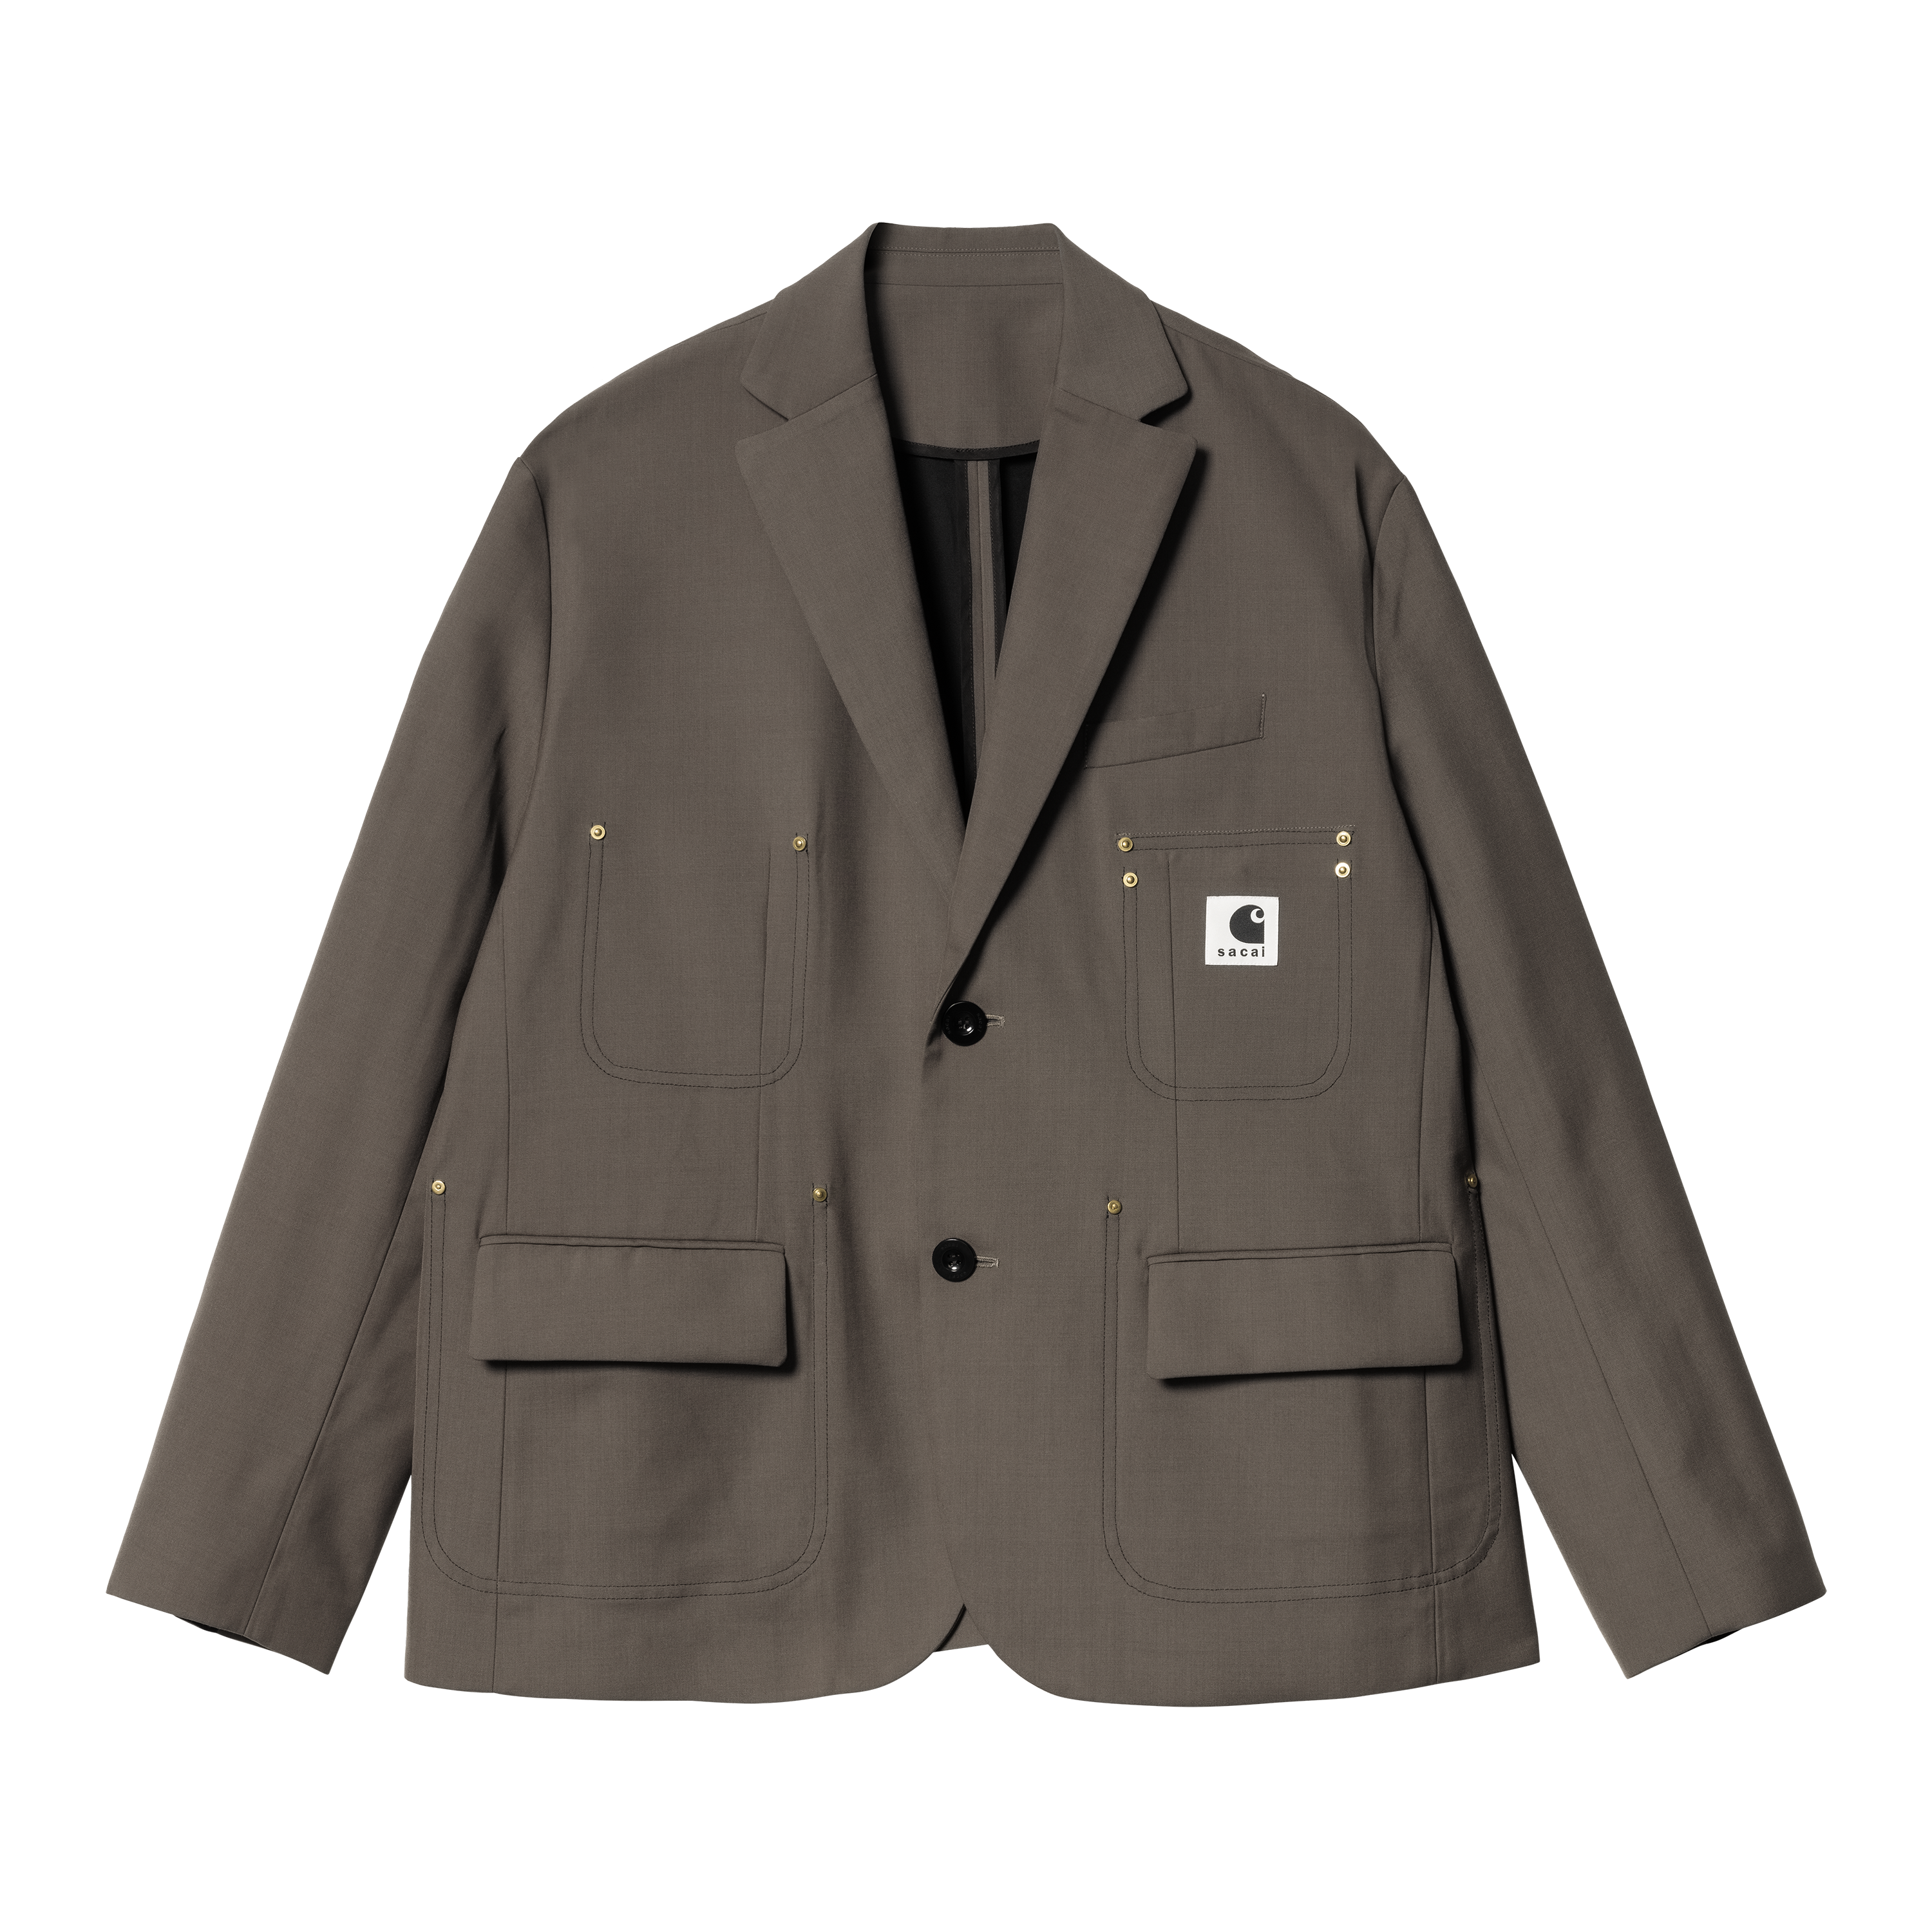 Carhartt WIP sacai x Carhartt WIP Suiting Bonding Jacket in Marrone